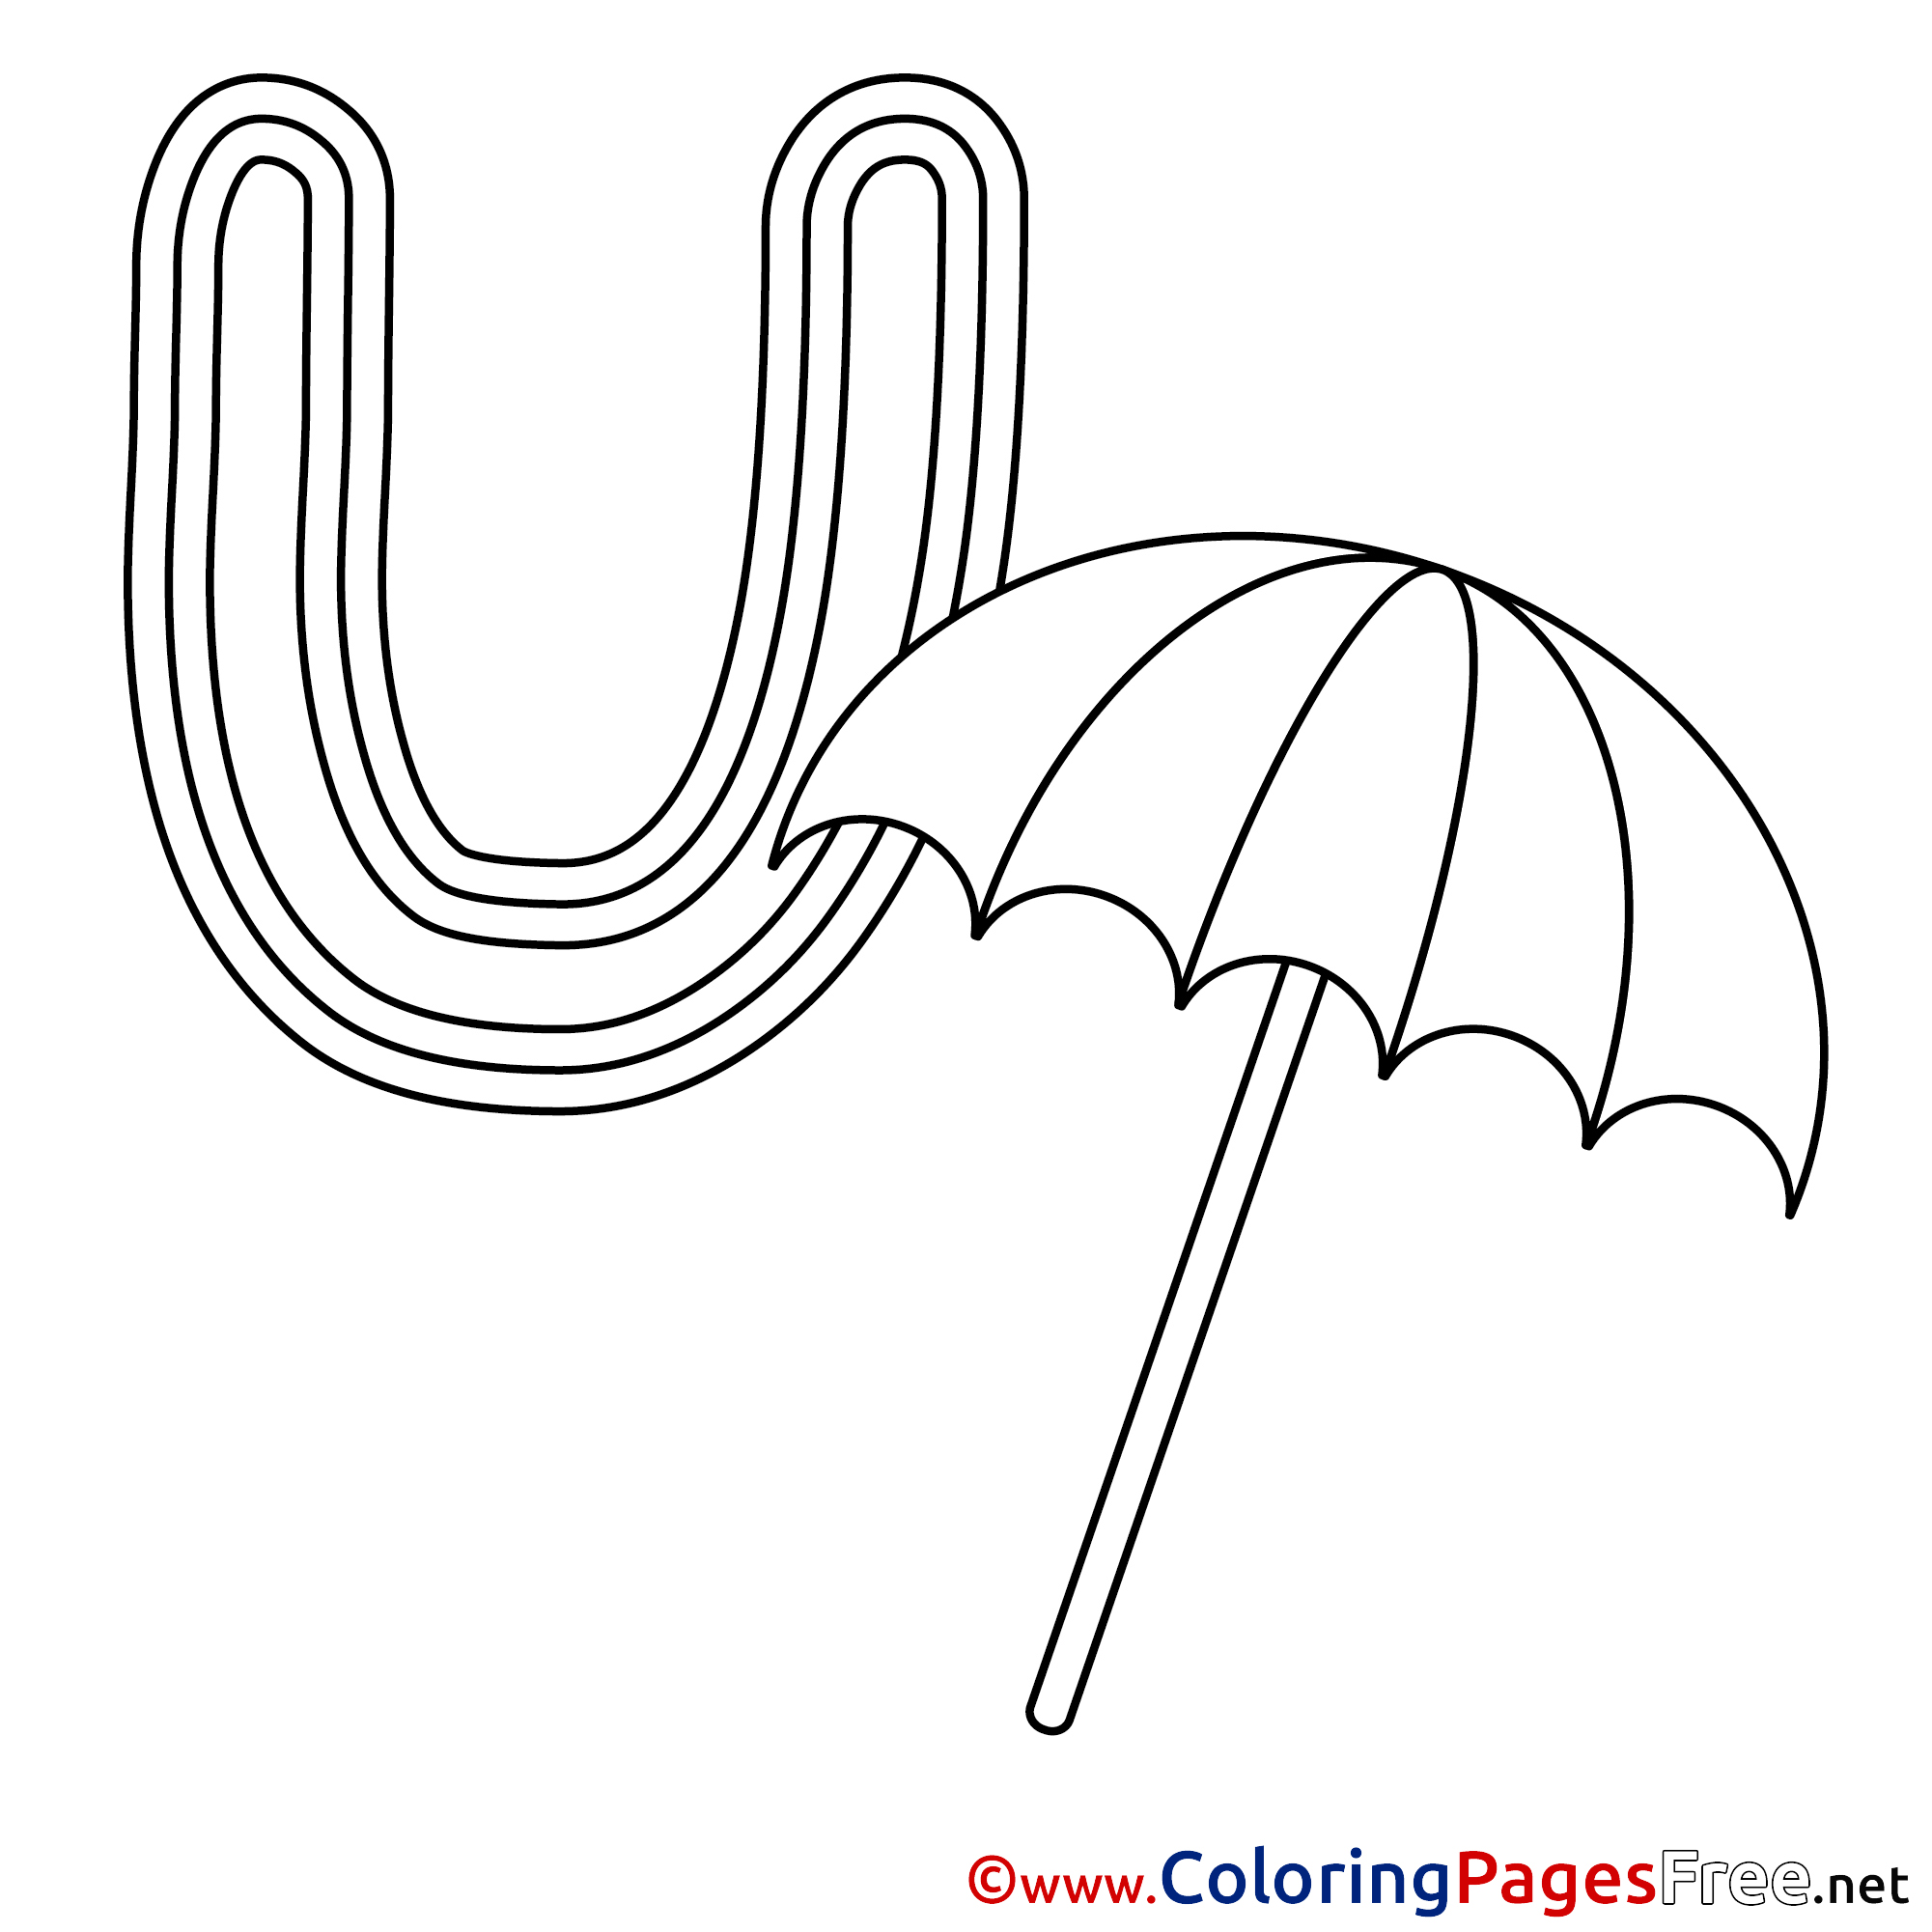 umbrella-free-colouring-page-alphabet